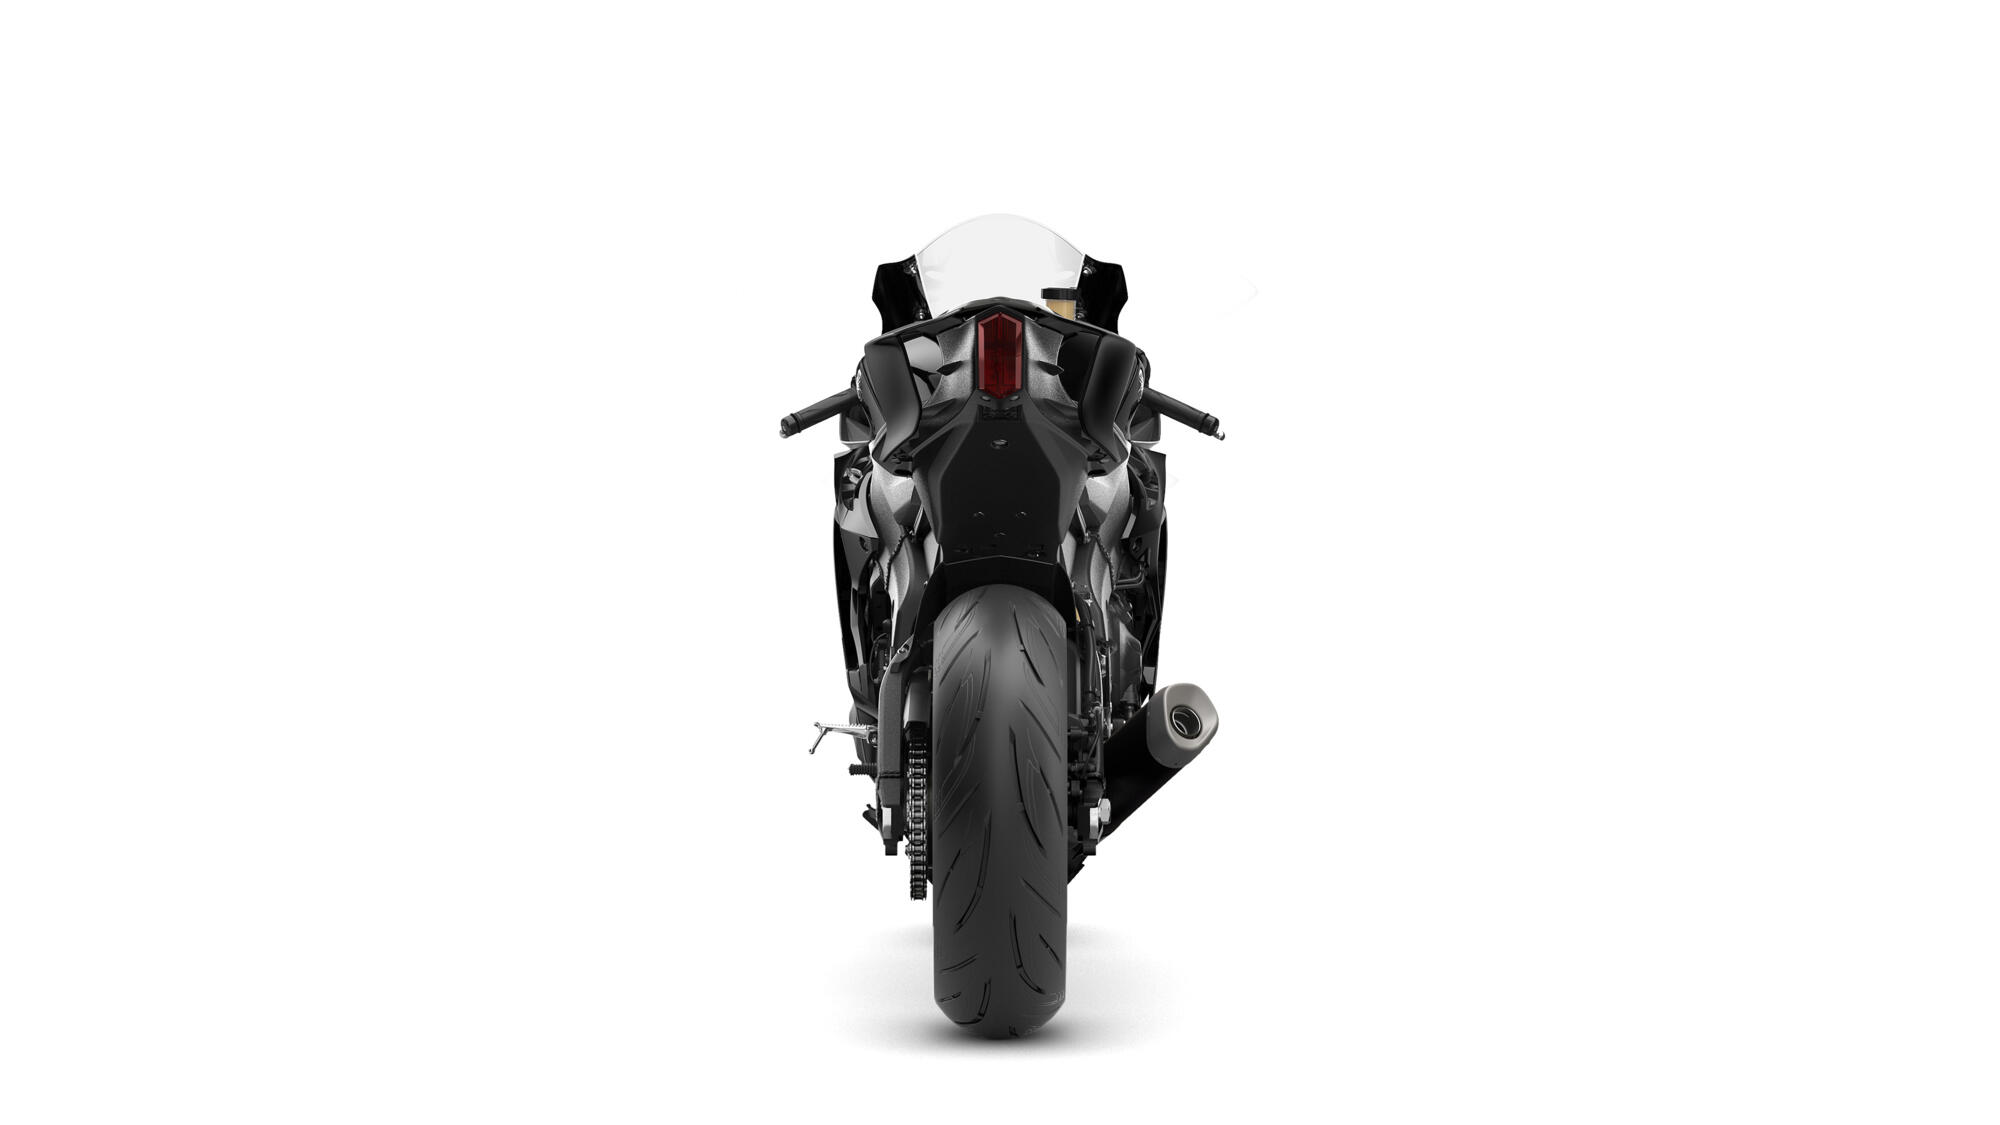 R6 RACE - Motorcycles - Yamaha Motor